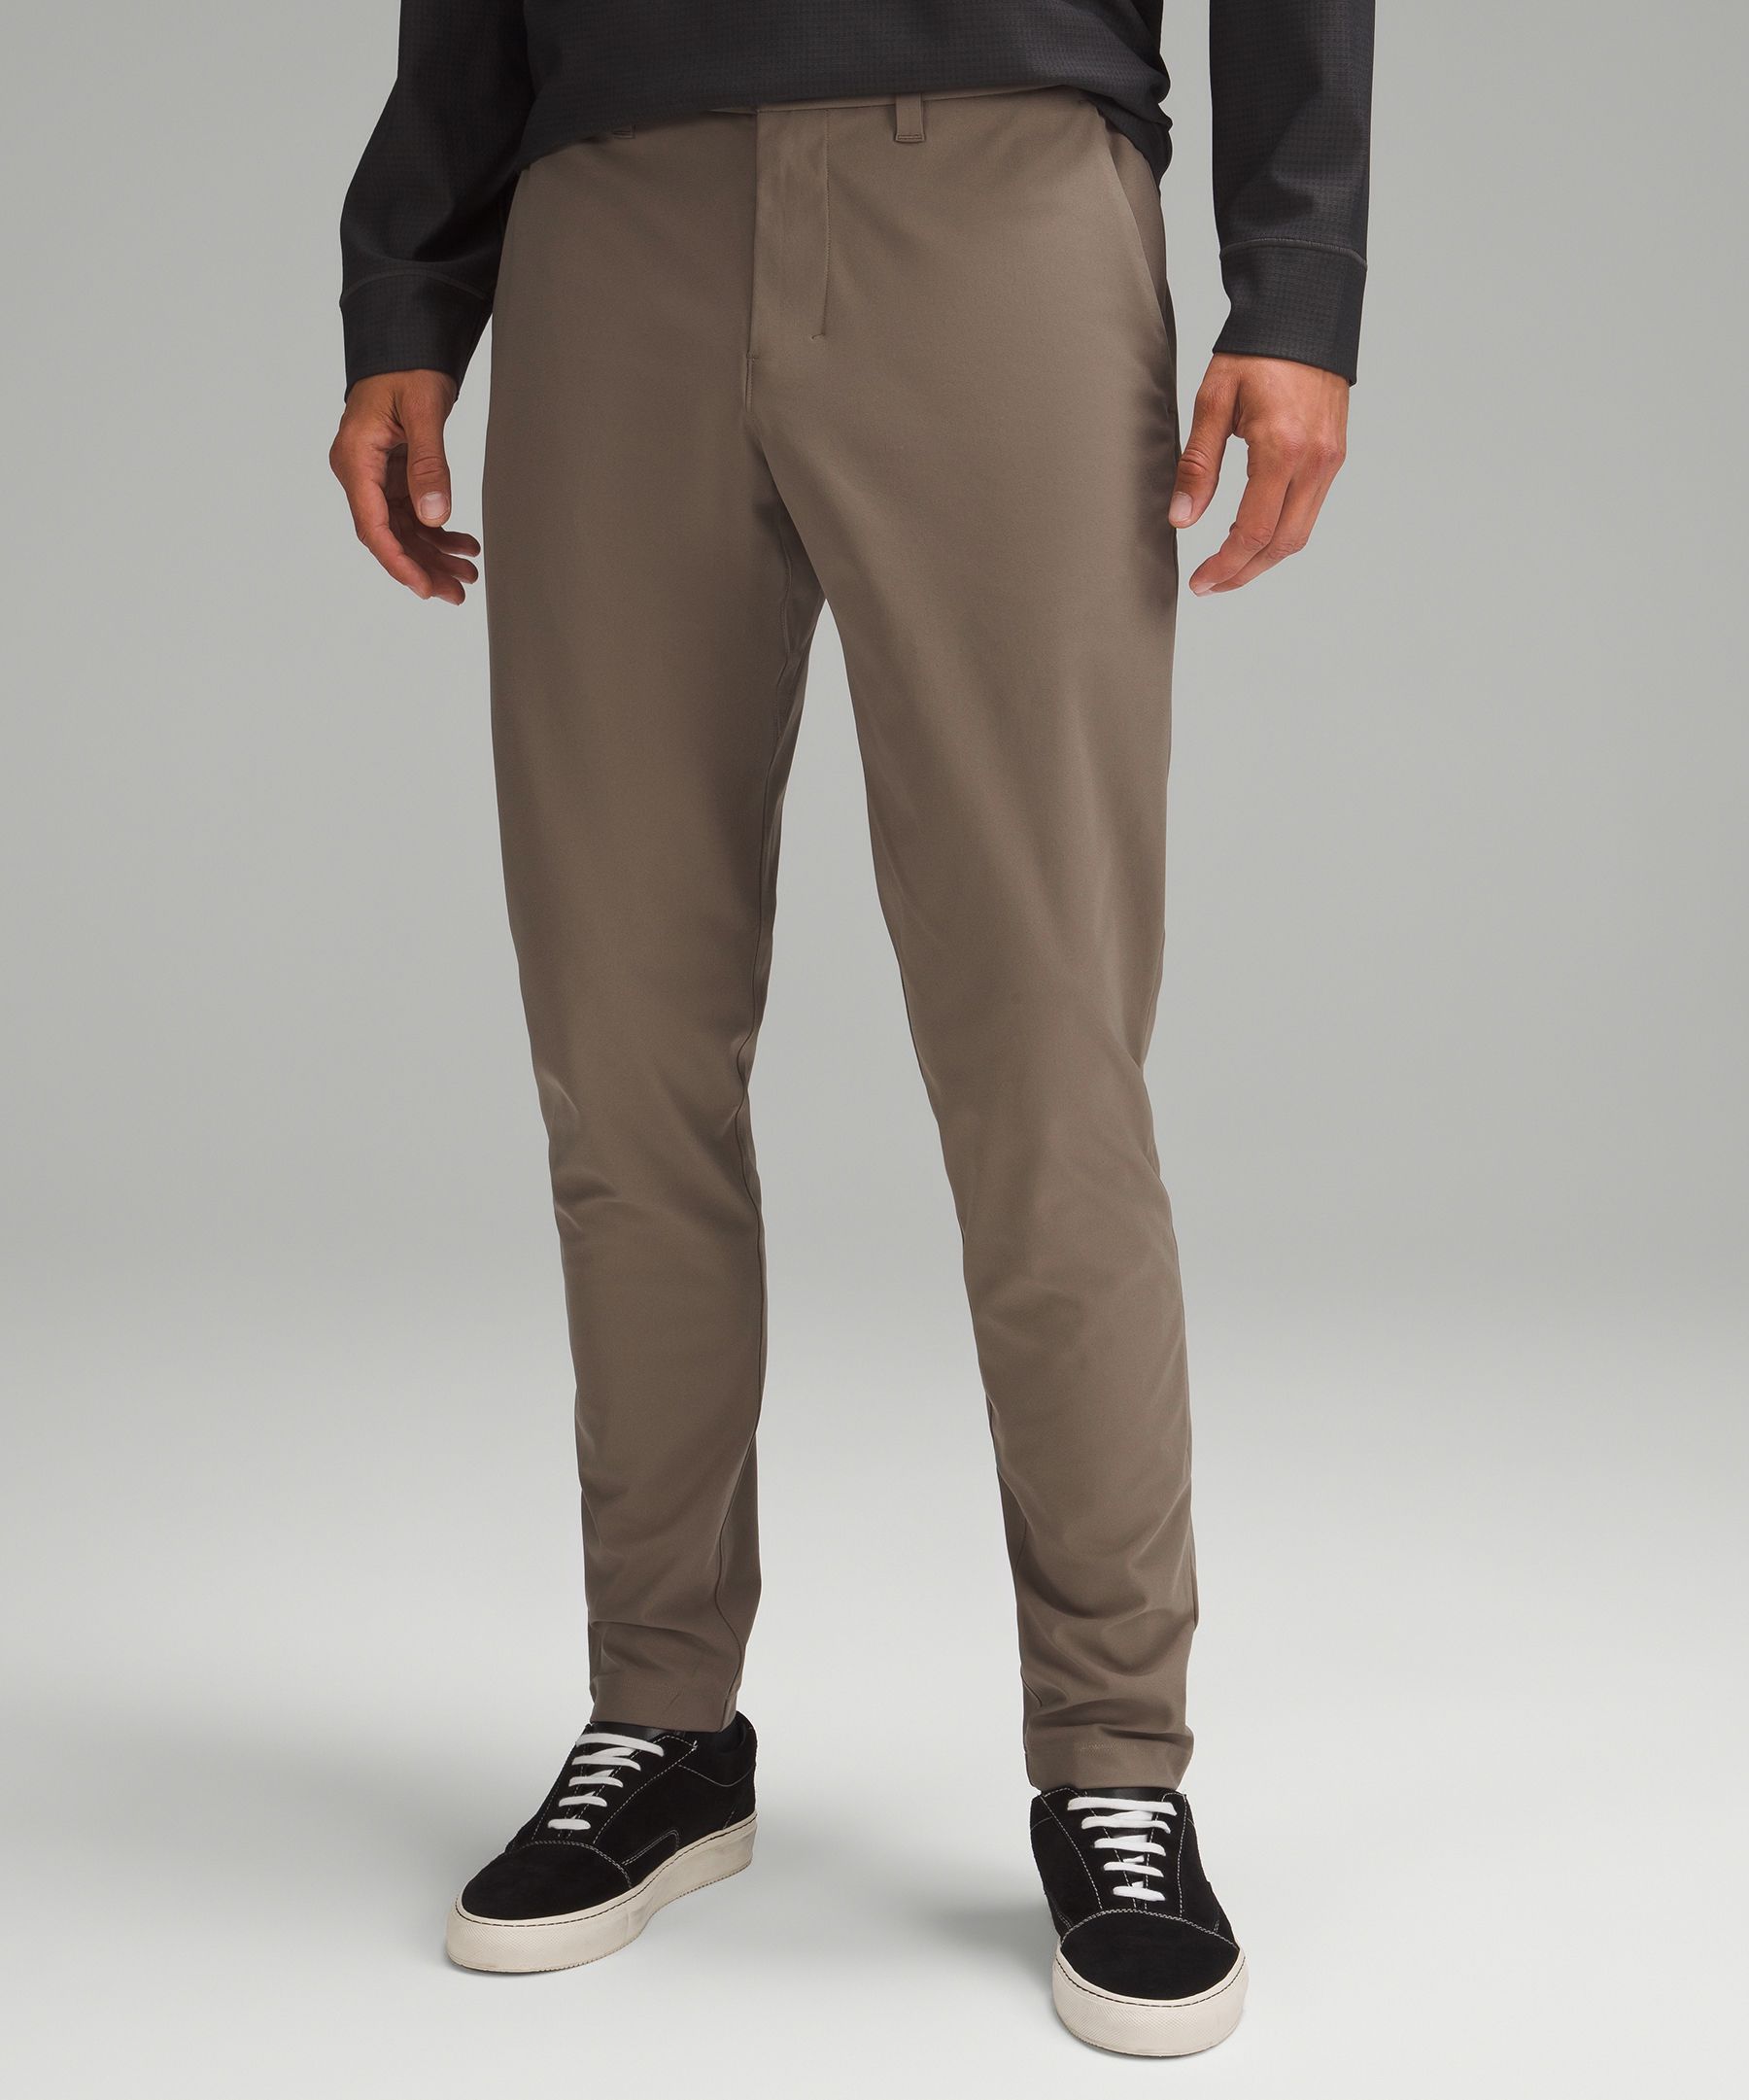 Lululemon Dress Pants Men's Gray New with Tags 28x32 519